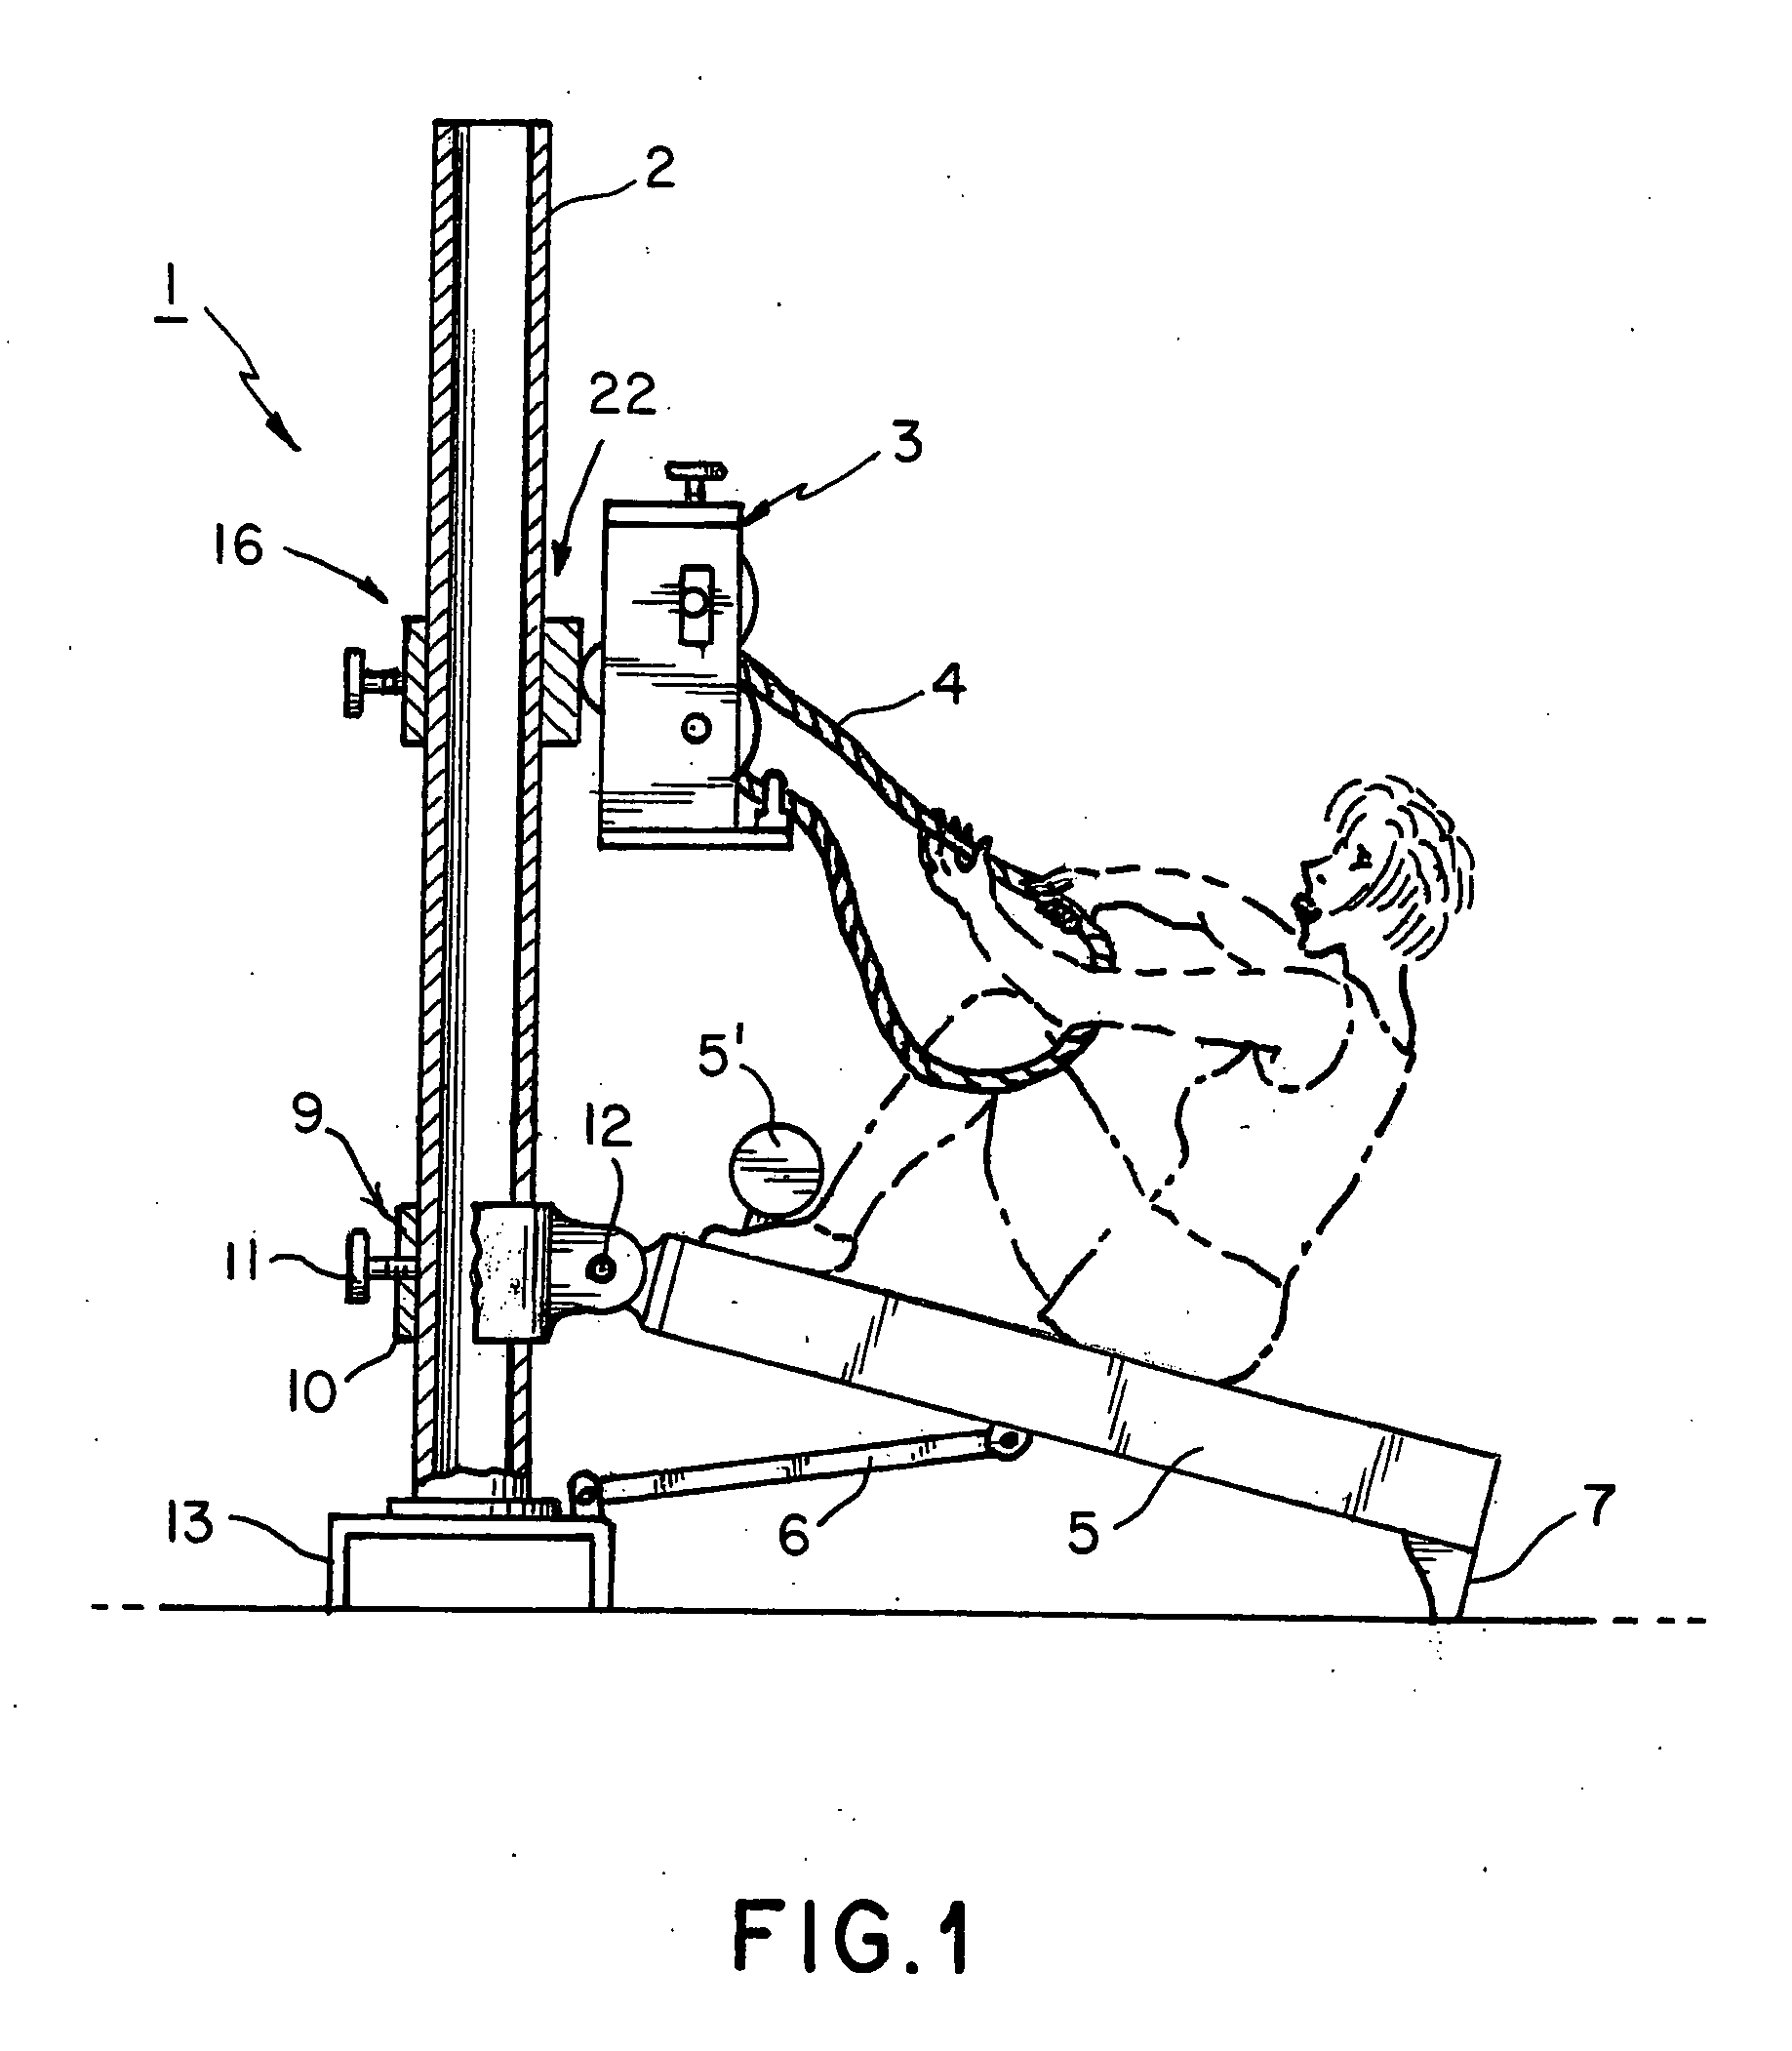 Portable simulated pulling apparatus